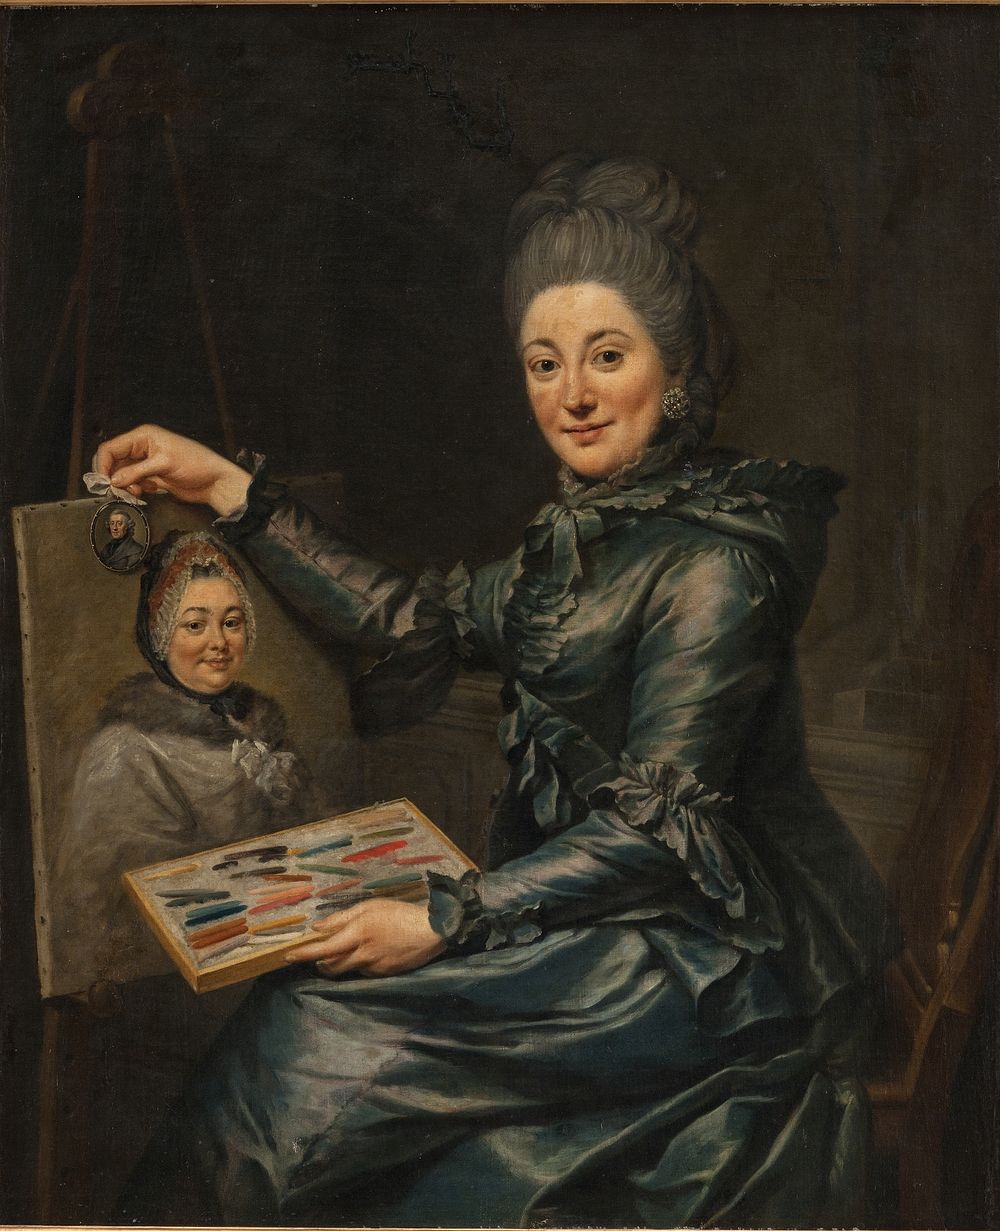 Portrait of the Artist's Daughter Elisabeth, Married Lampe by Johann Georg Ziesenis